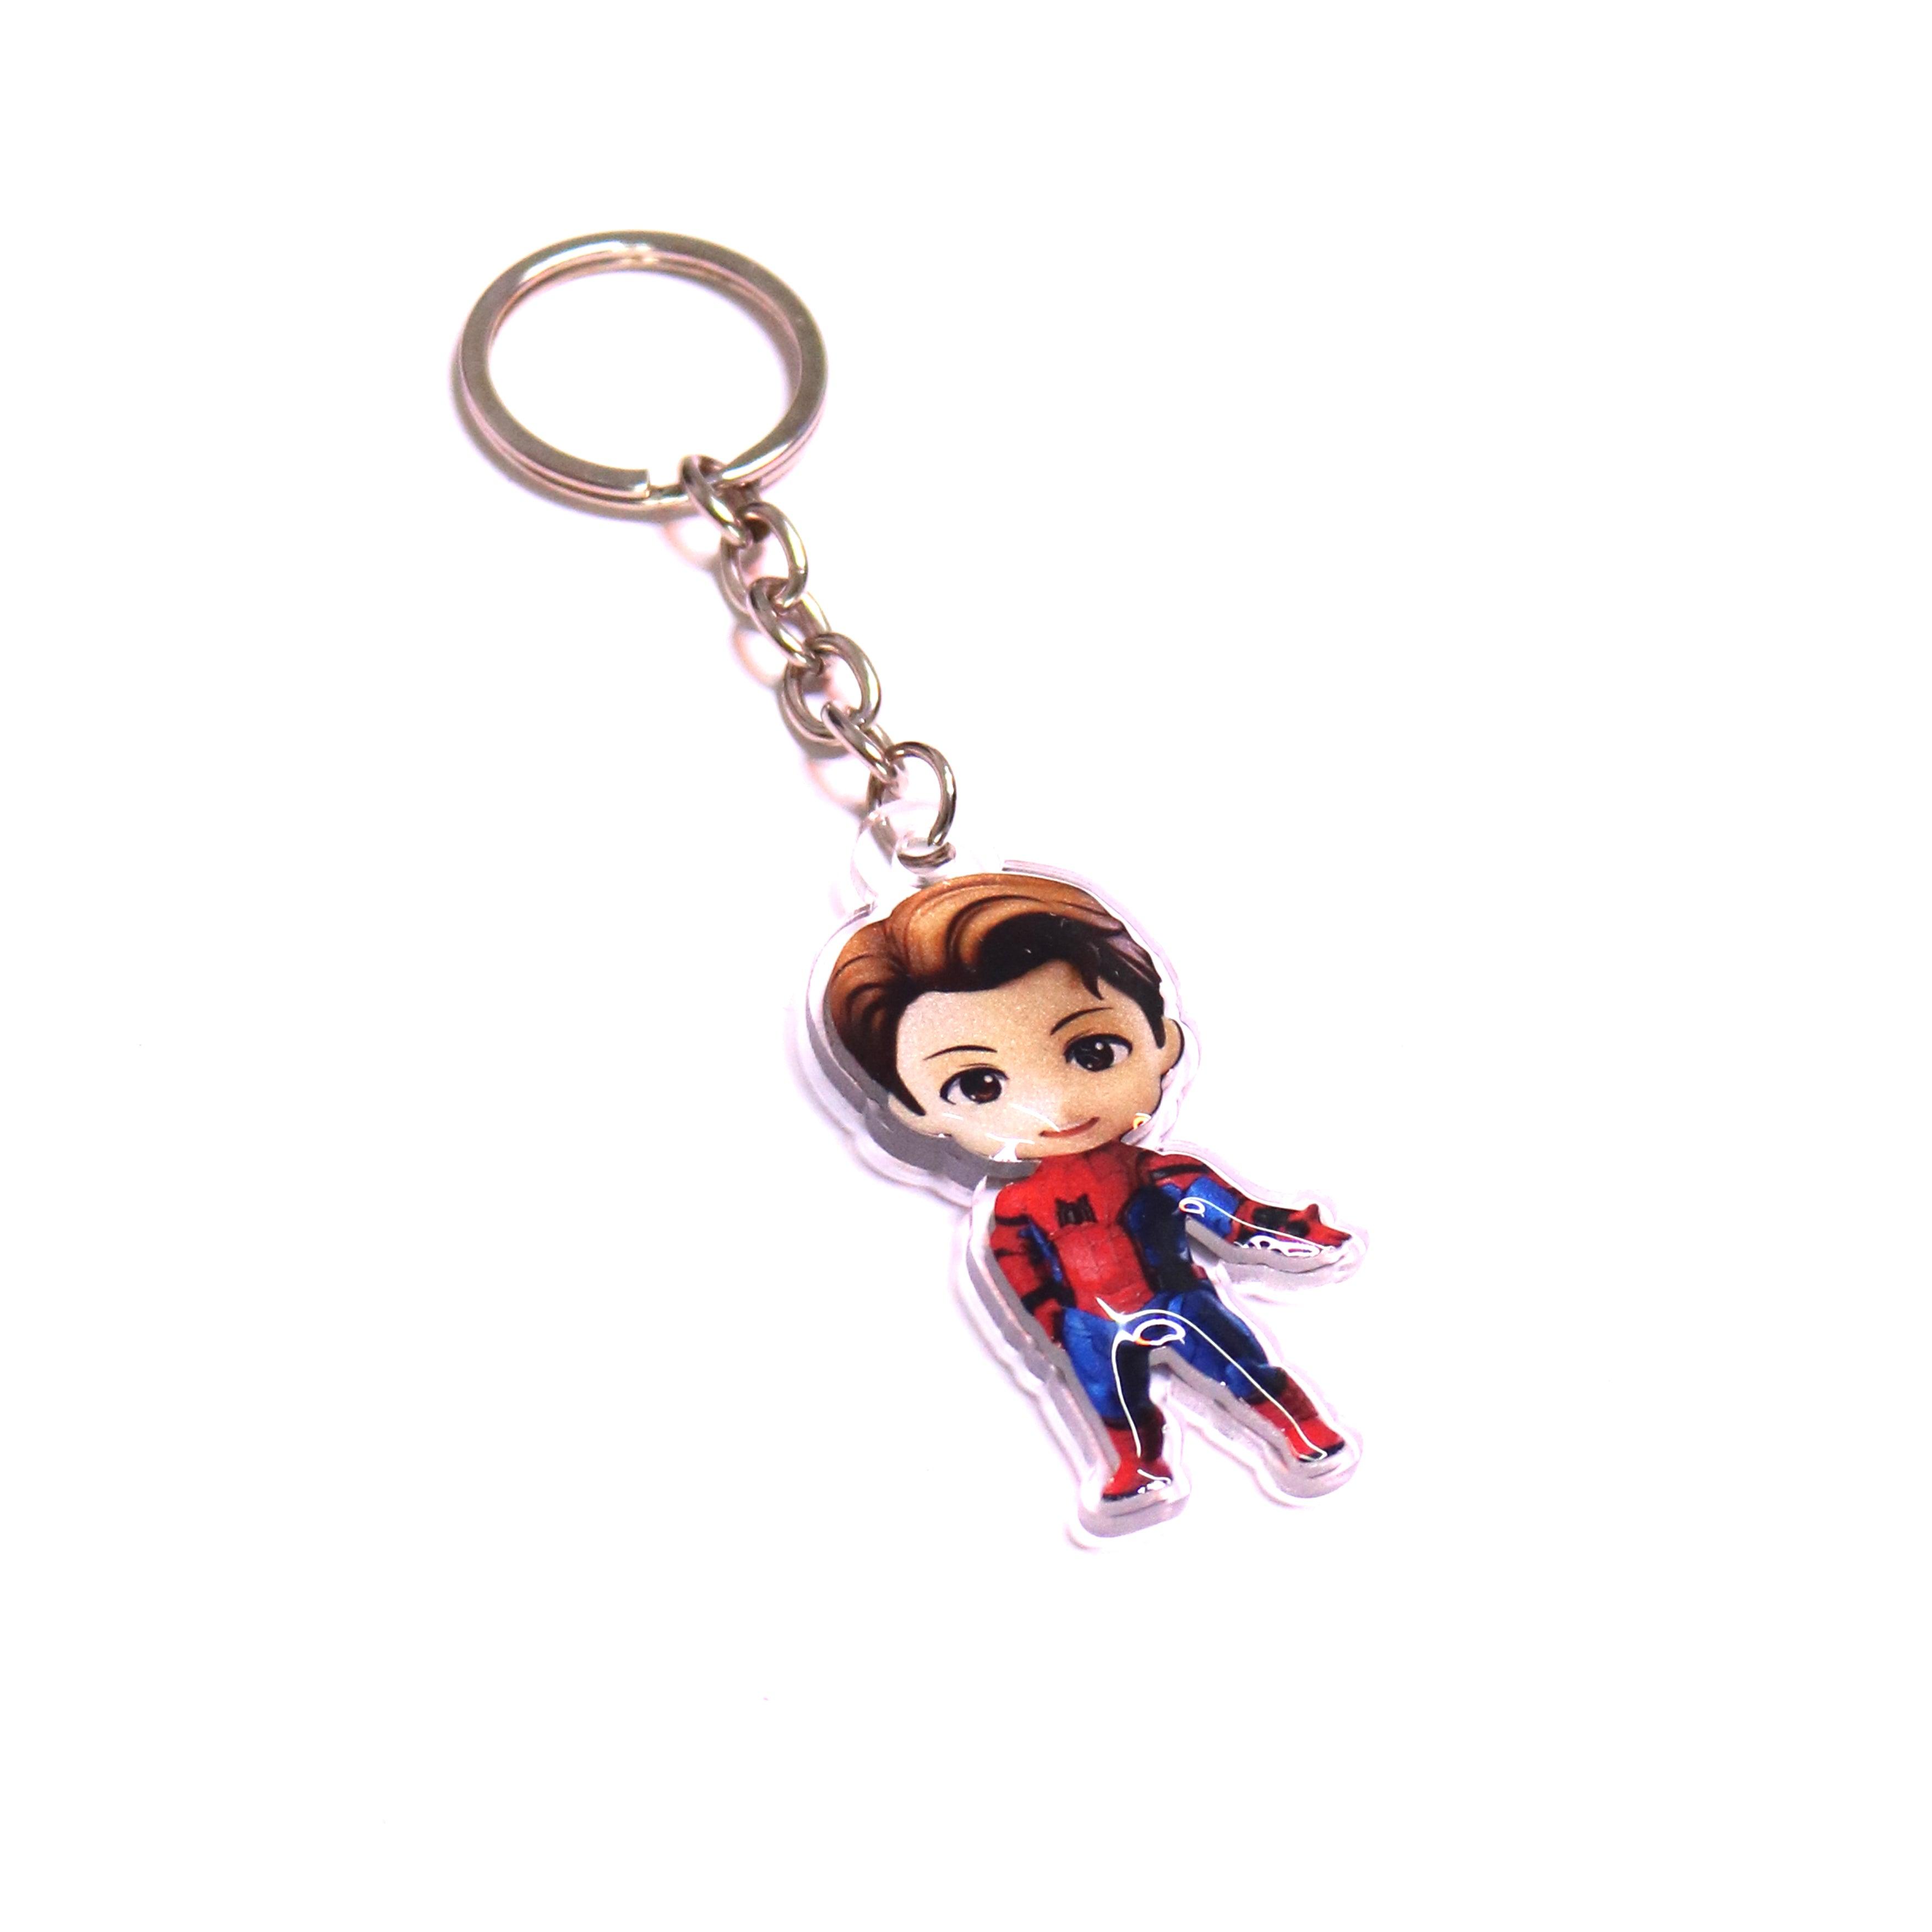 Marvel Spiderman Keychain - Orbiz Creativez